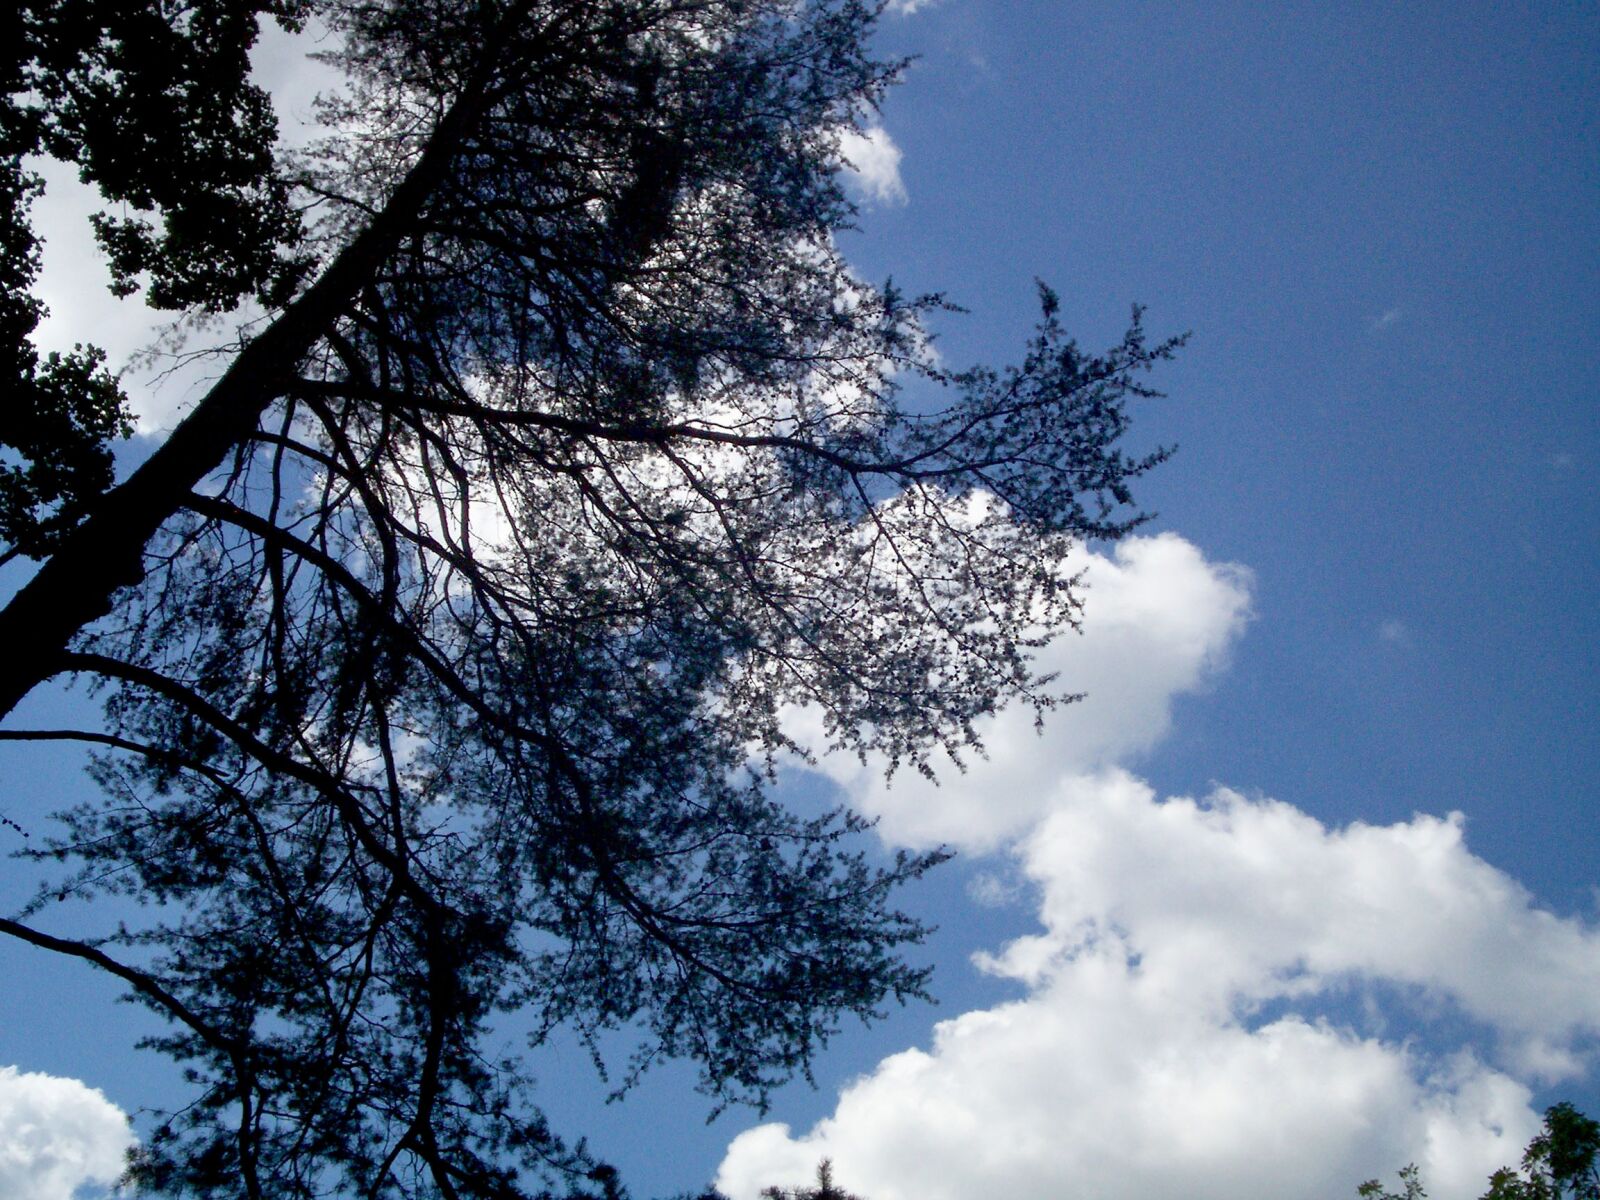 Kodak C310 DIGITAL CAMERA sample photo. Tree, cloud, scenic photography